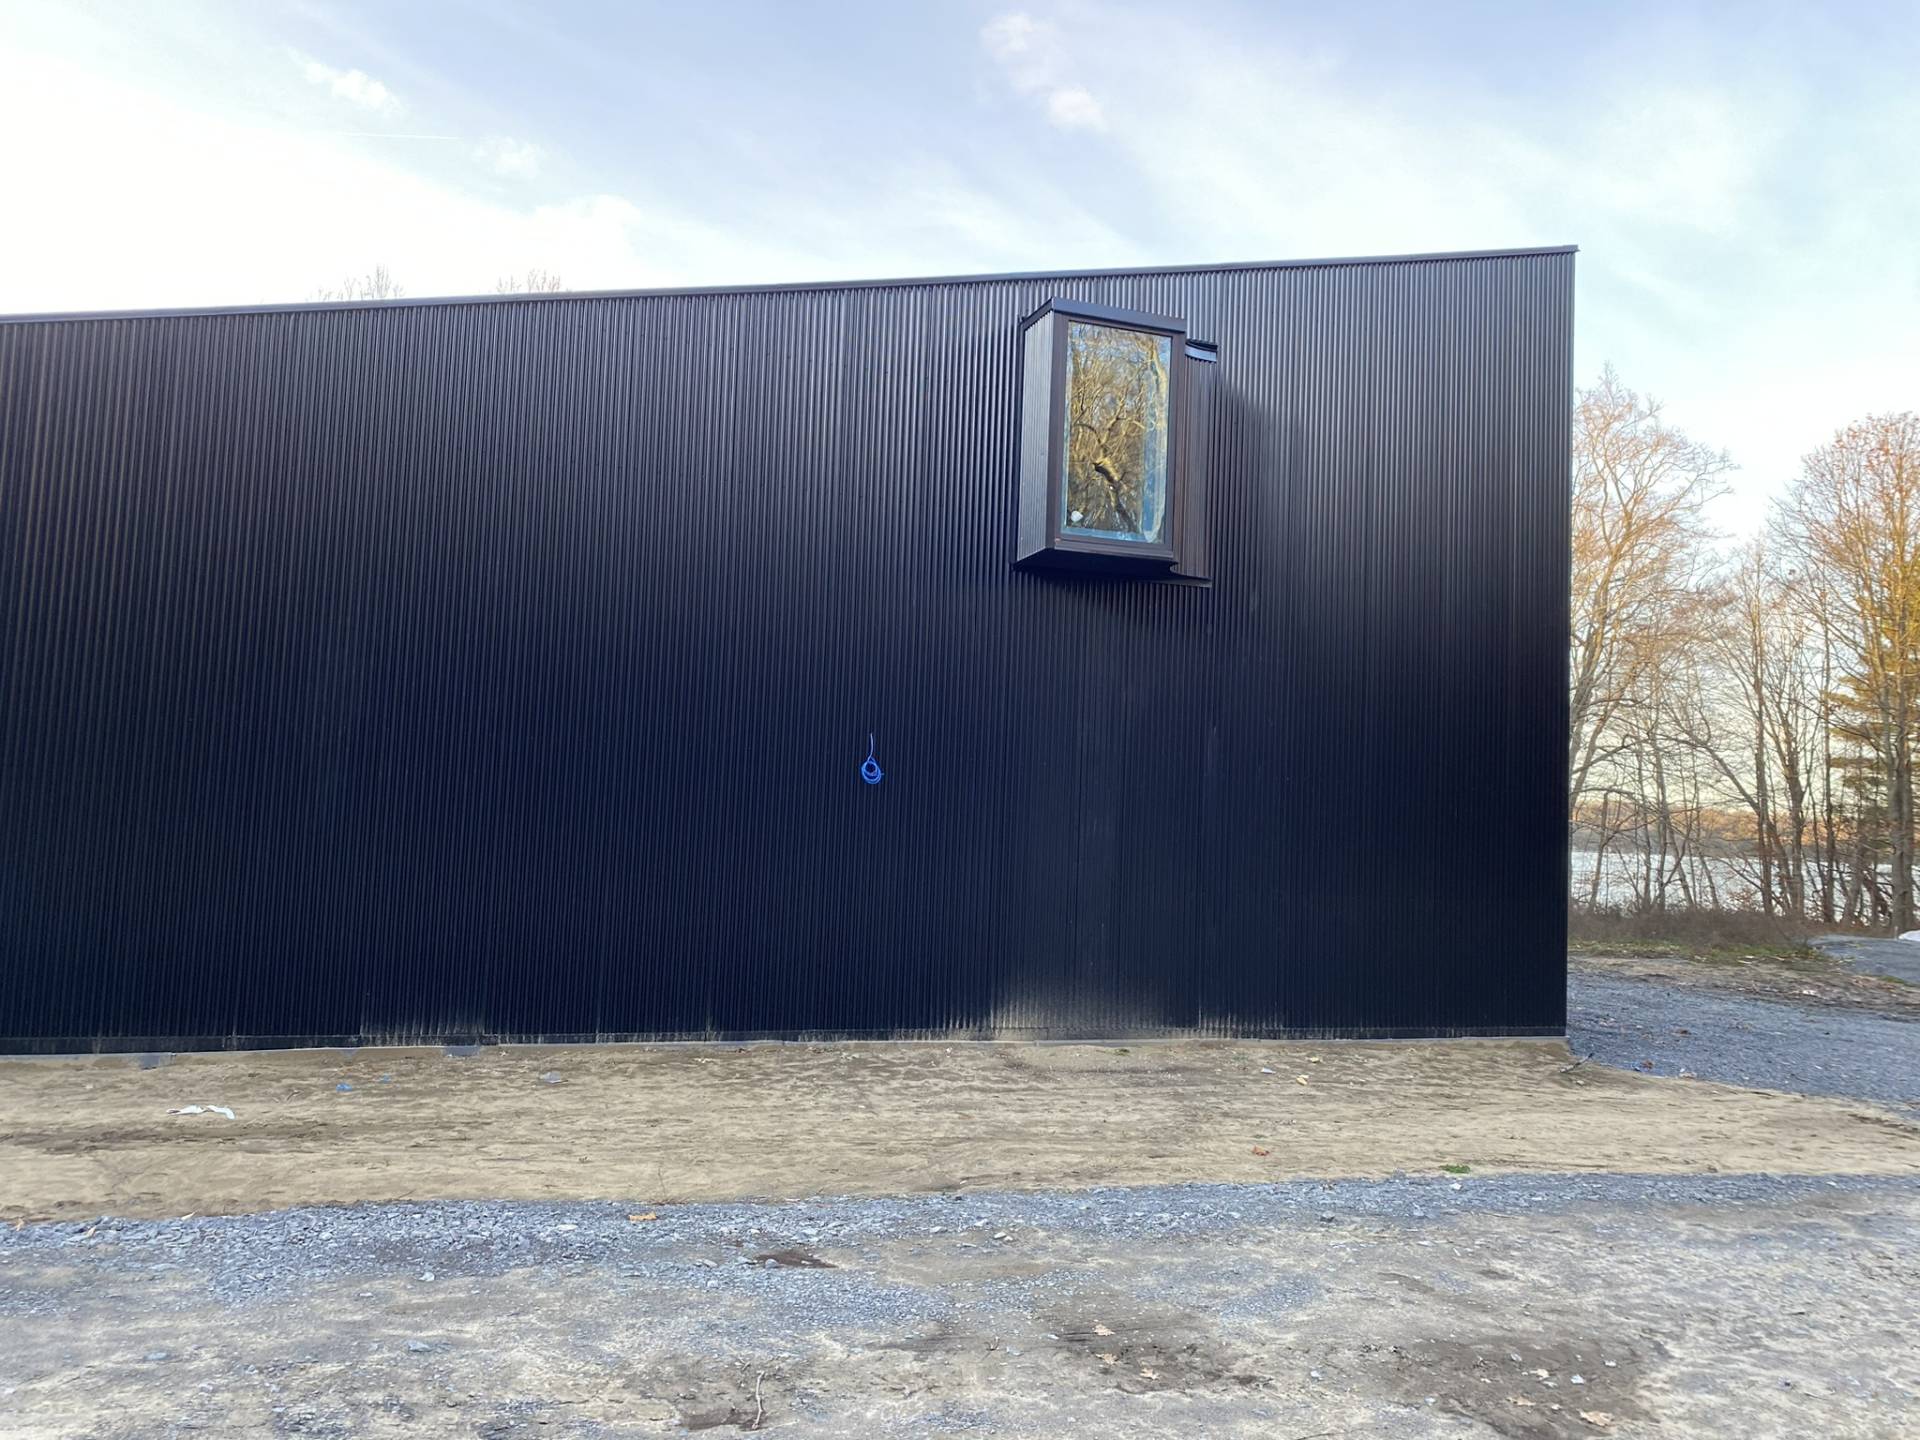 7/8” Corrugated Panels installation